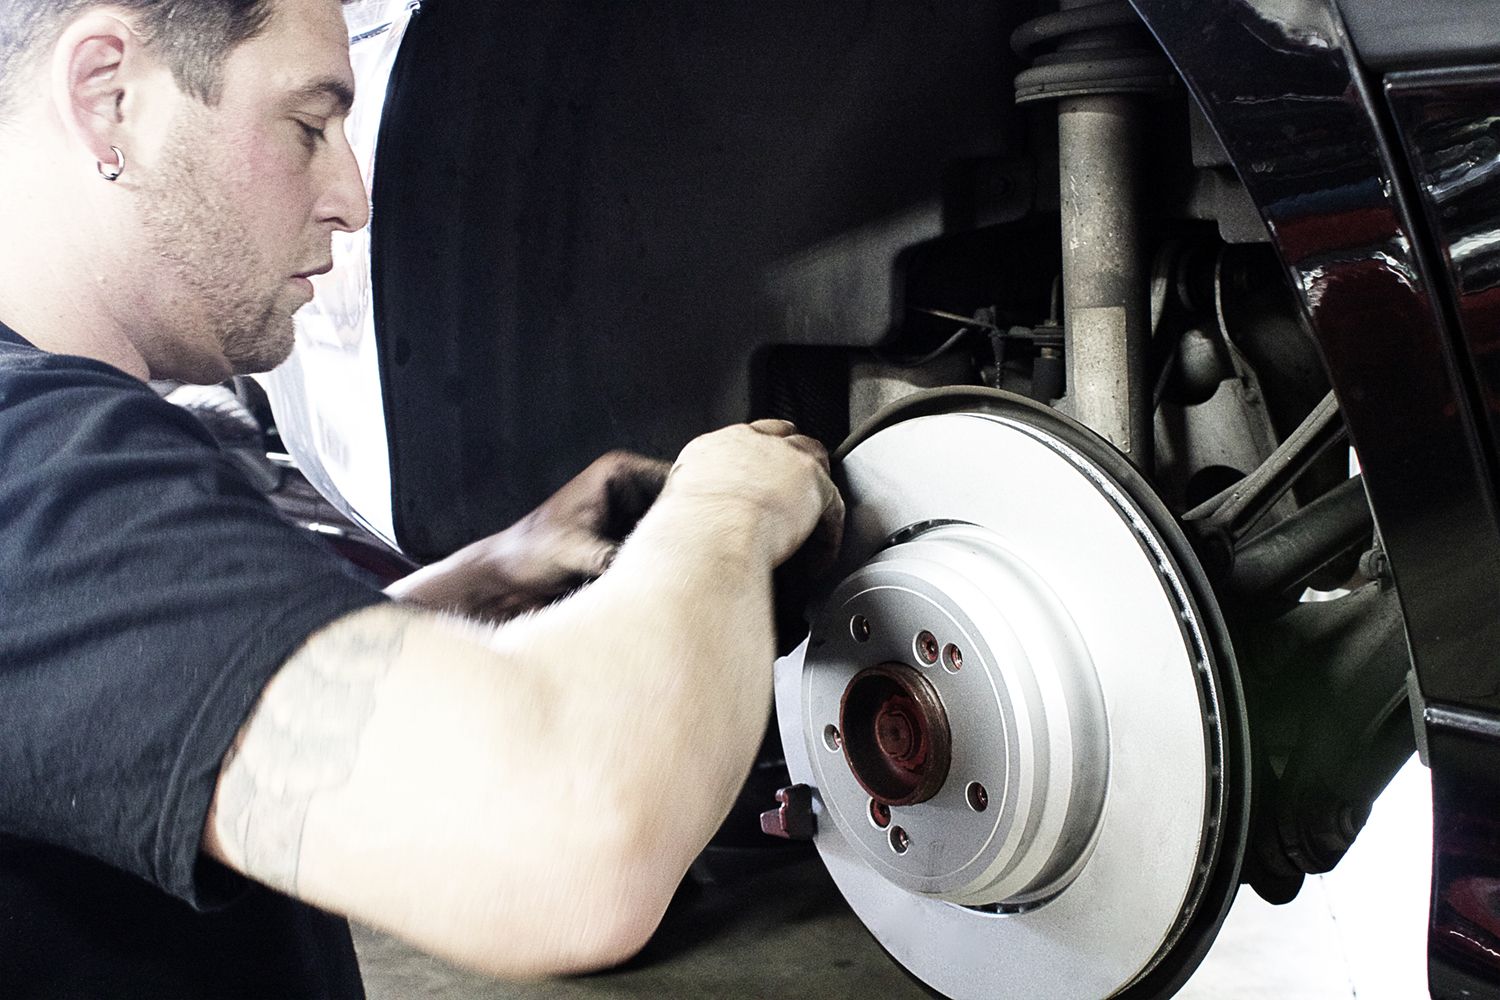 Autobahn owner Zach install brake calipers